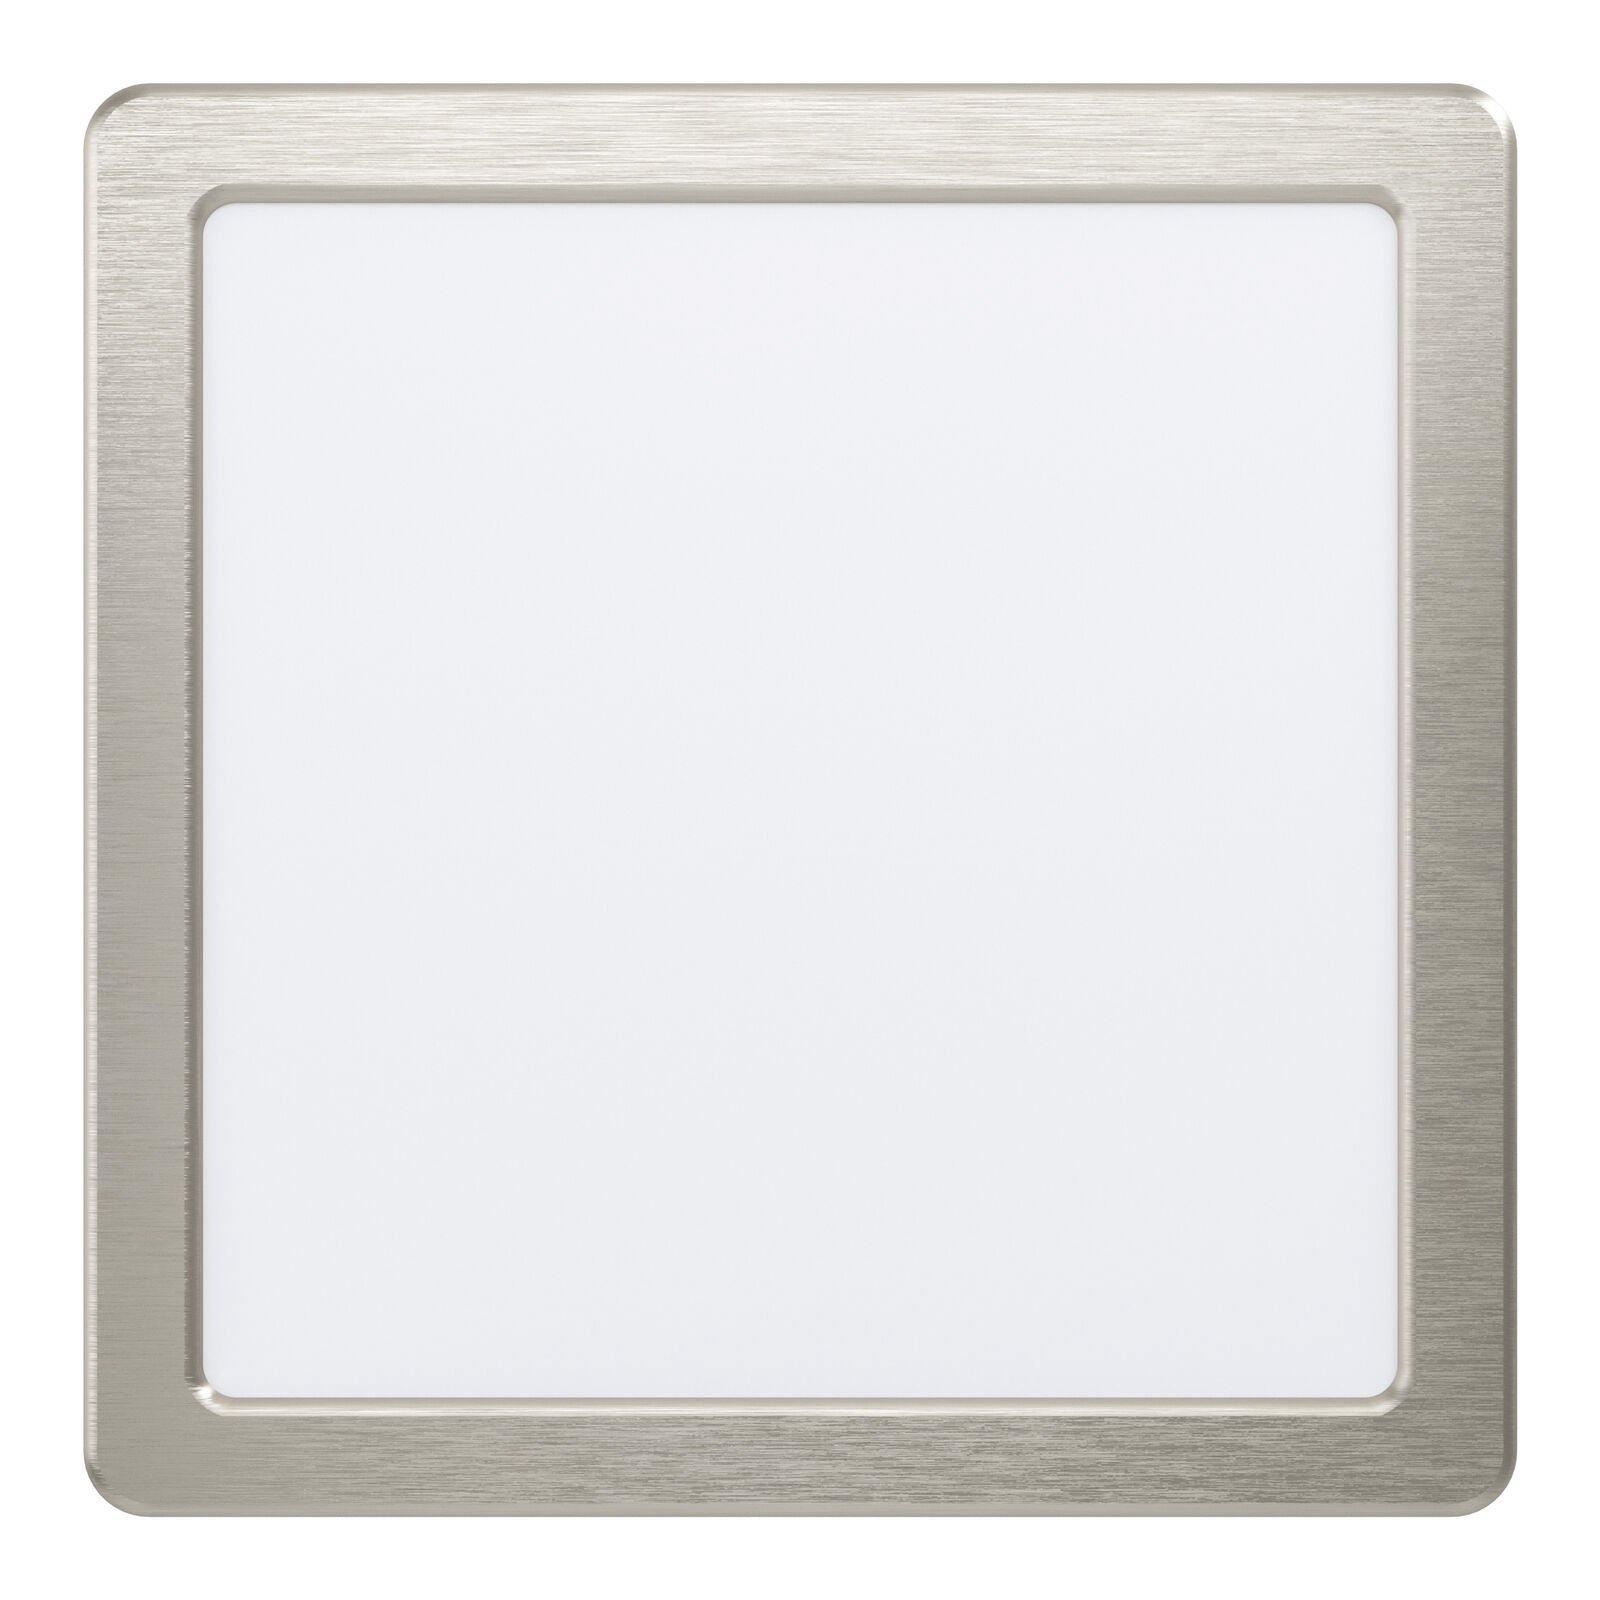 Square Ceiling Flush Downlight Satin Nickel Spotlight 16.5W Built in LED